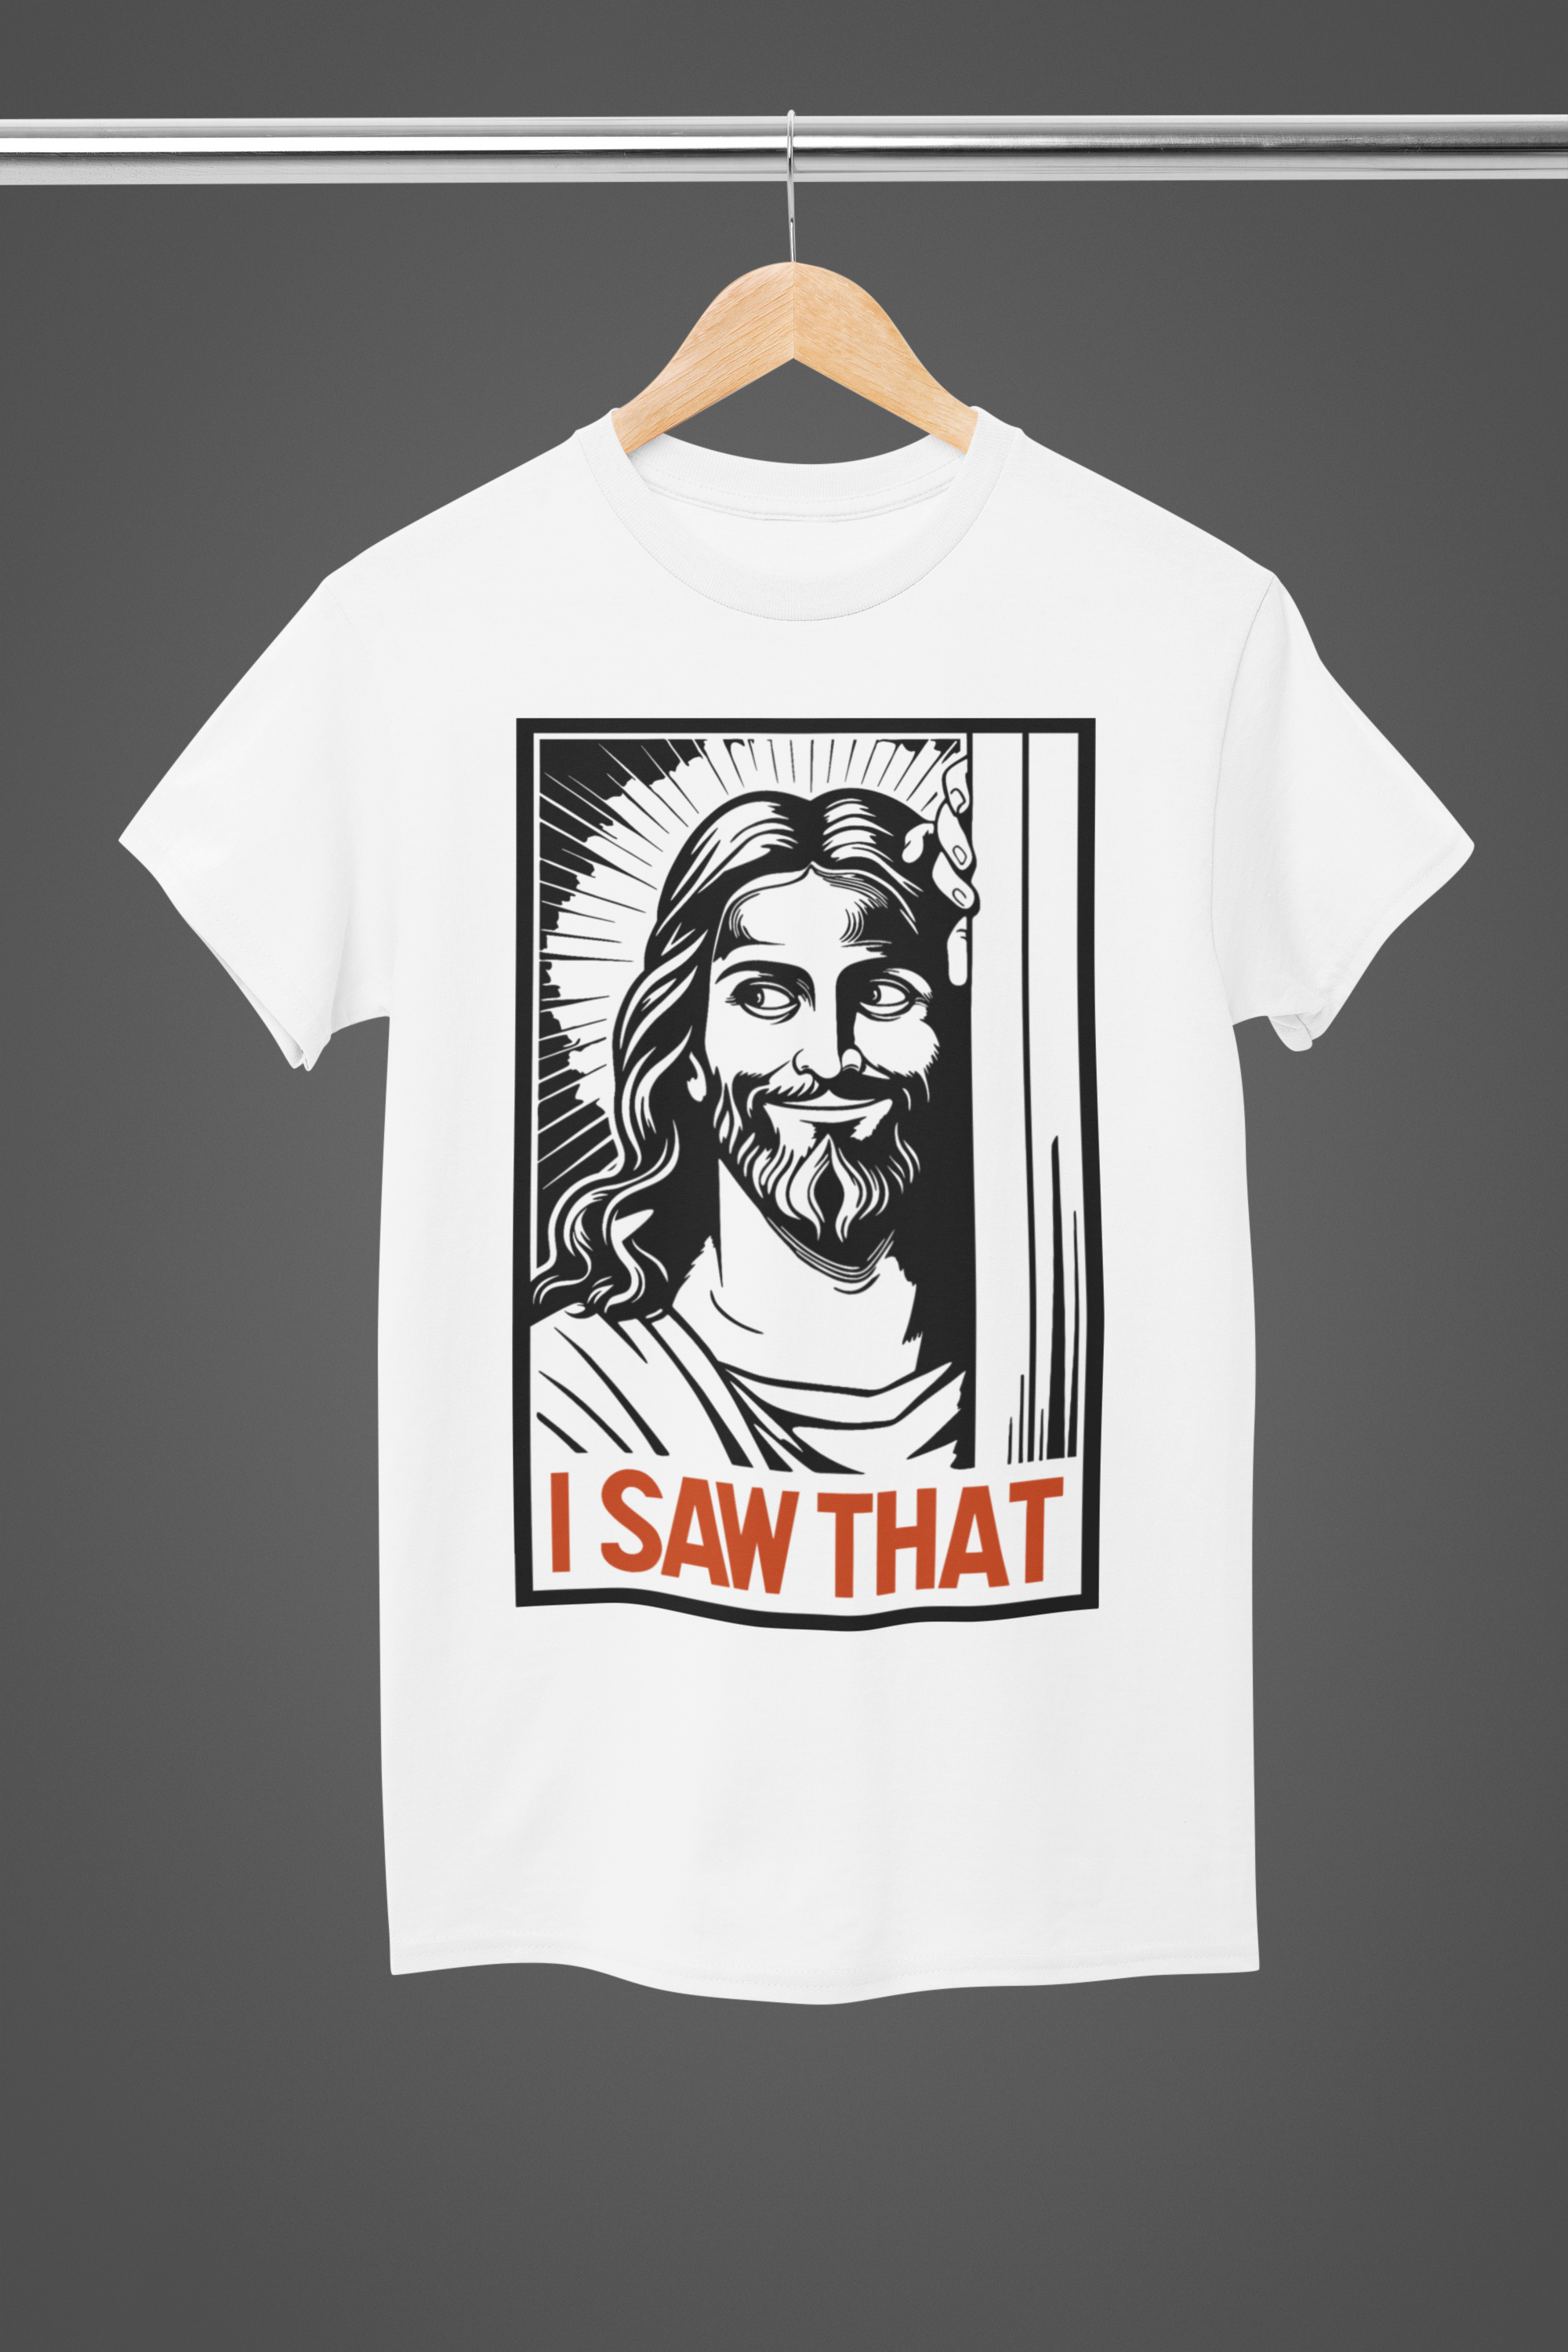 Jesus "I Saw That" - T-shirt